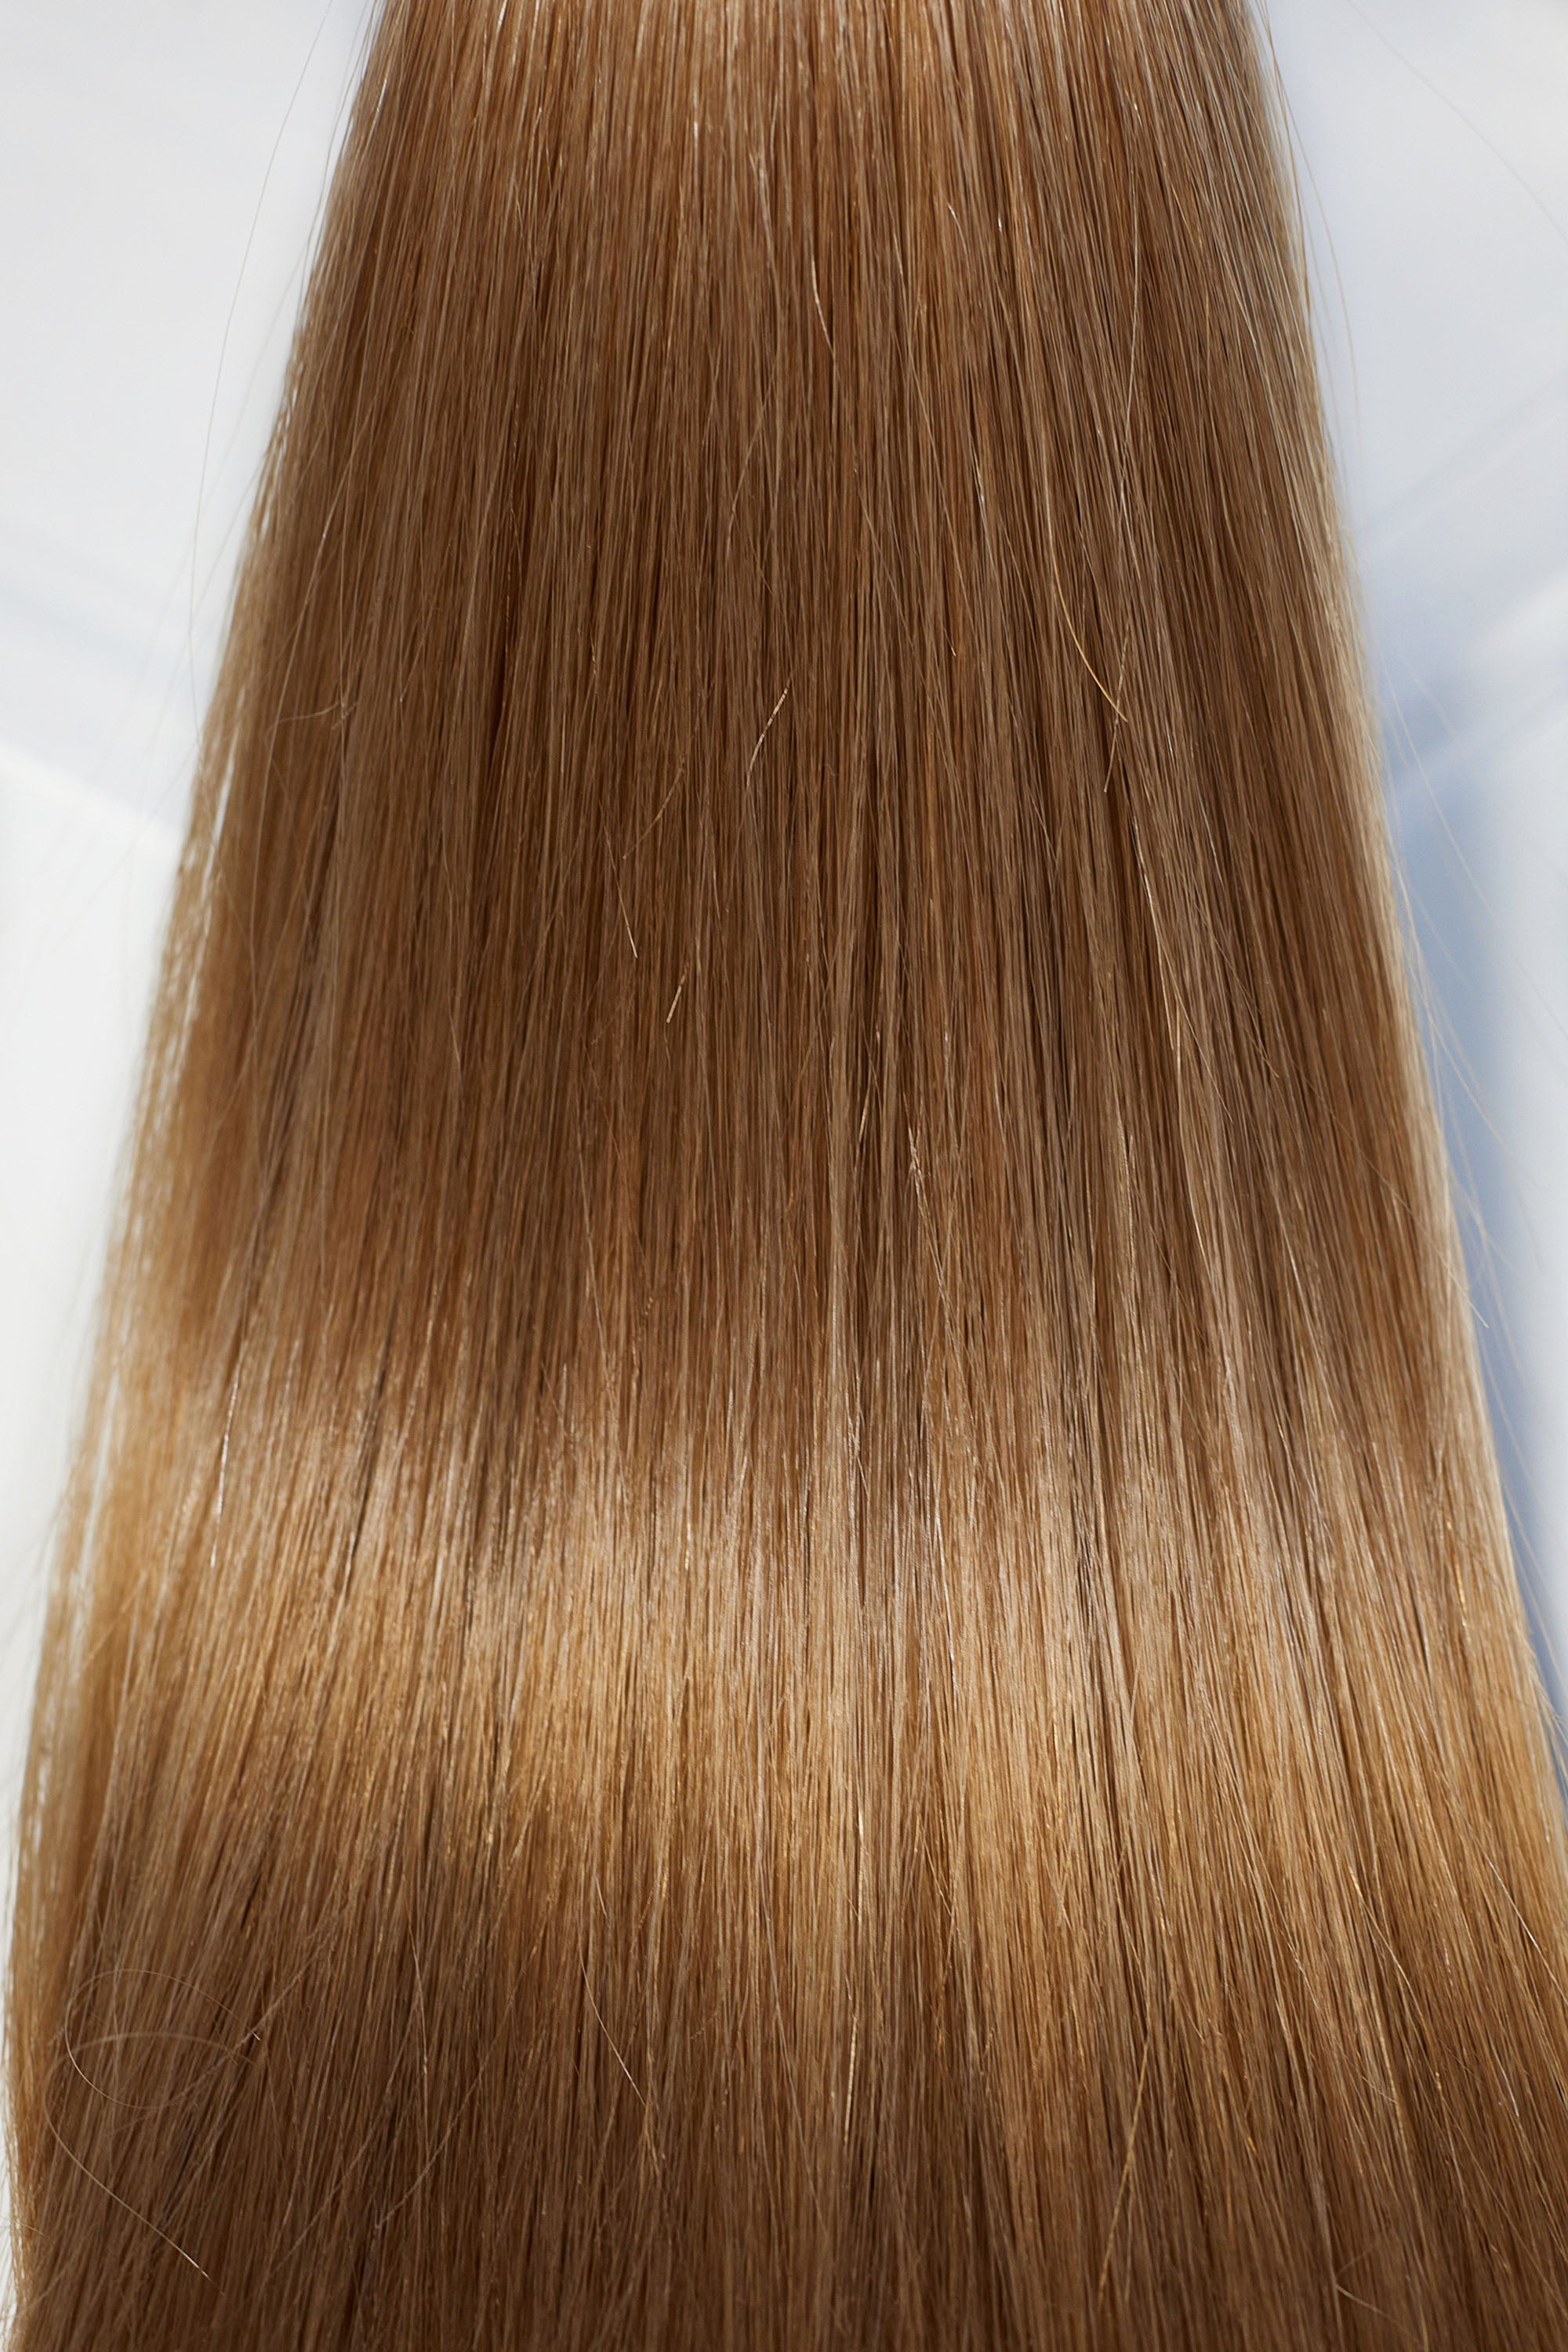 Behair professional Keratin Tip "Premium" 16" (40cm) Natural Straight Caramel Brown #8 - 25g (1g each pcs) hair extensions